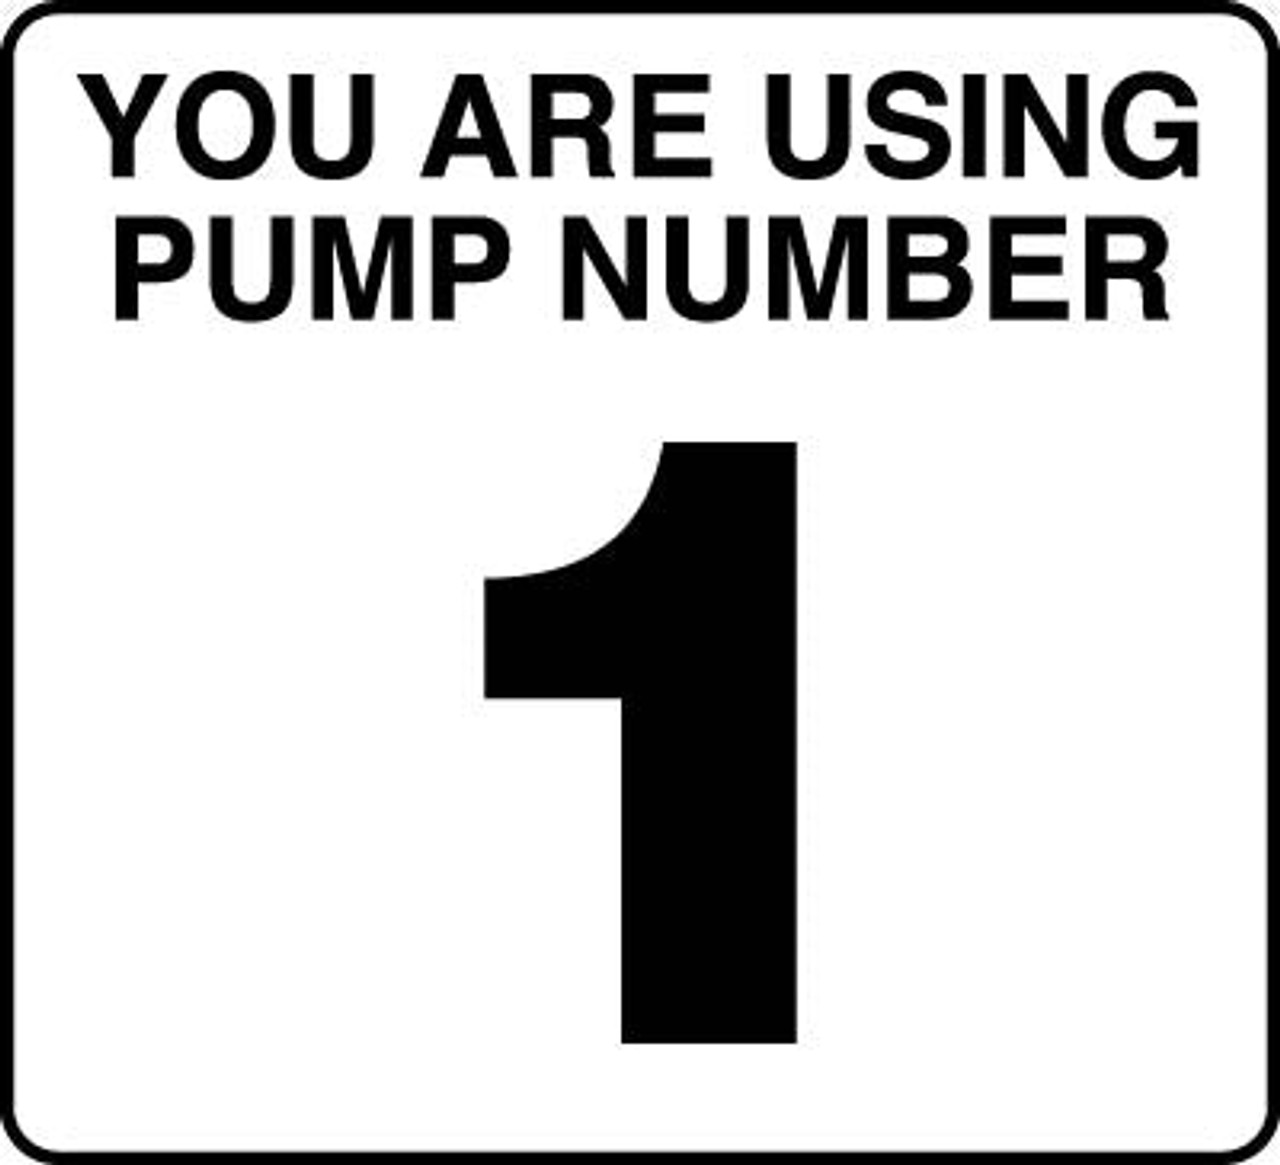 PID-UPN1 - Pump Number 1 Black on White 2.75" x 2.50"